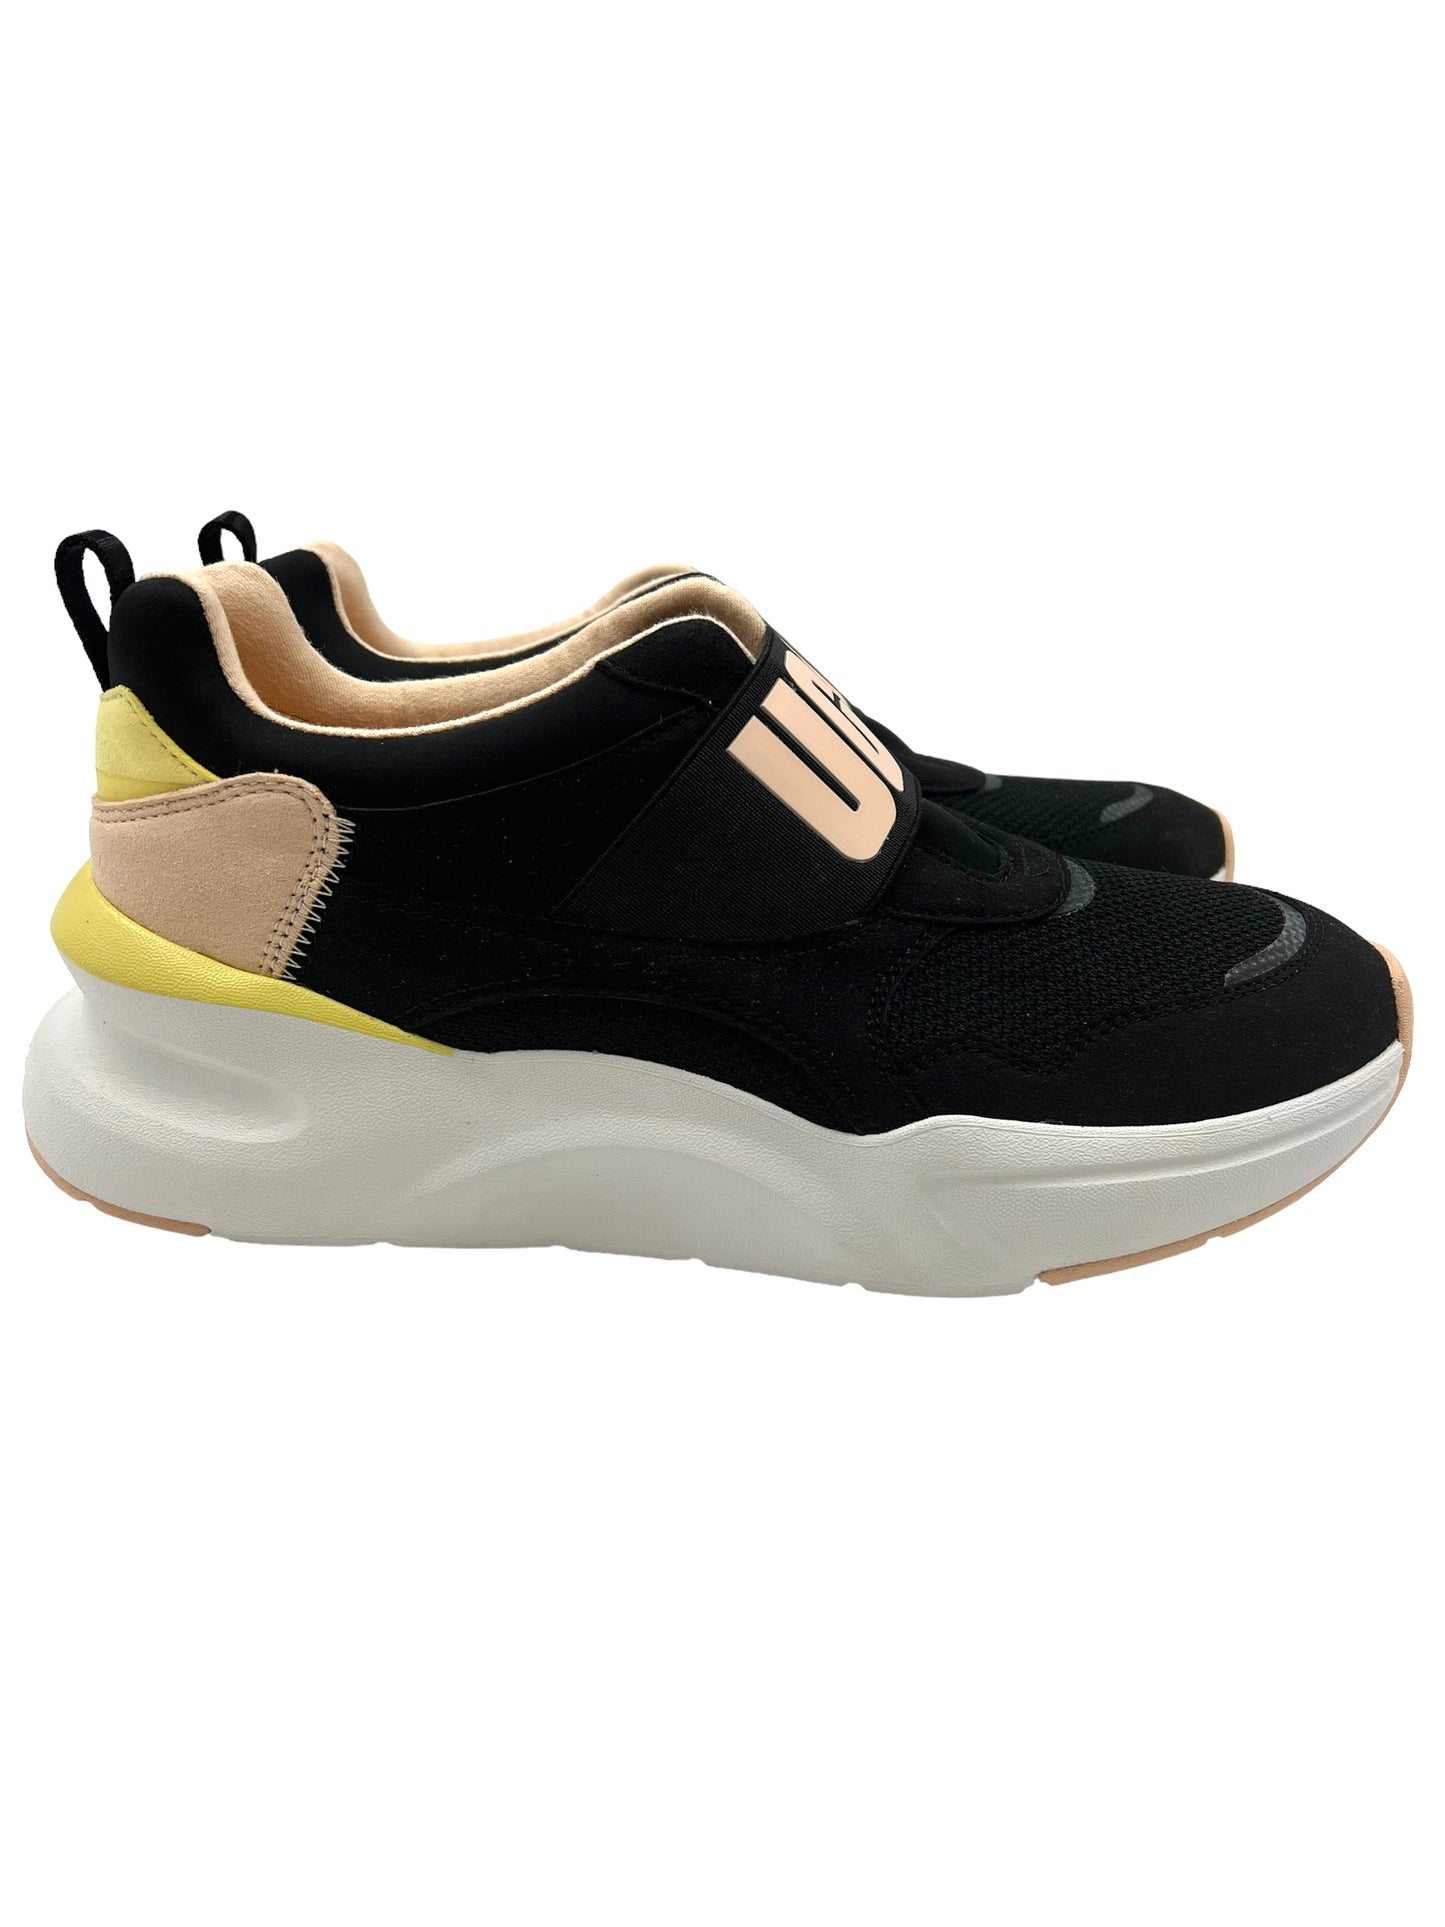 UGG Size 9 Black LA Flex Sneakers